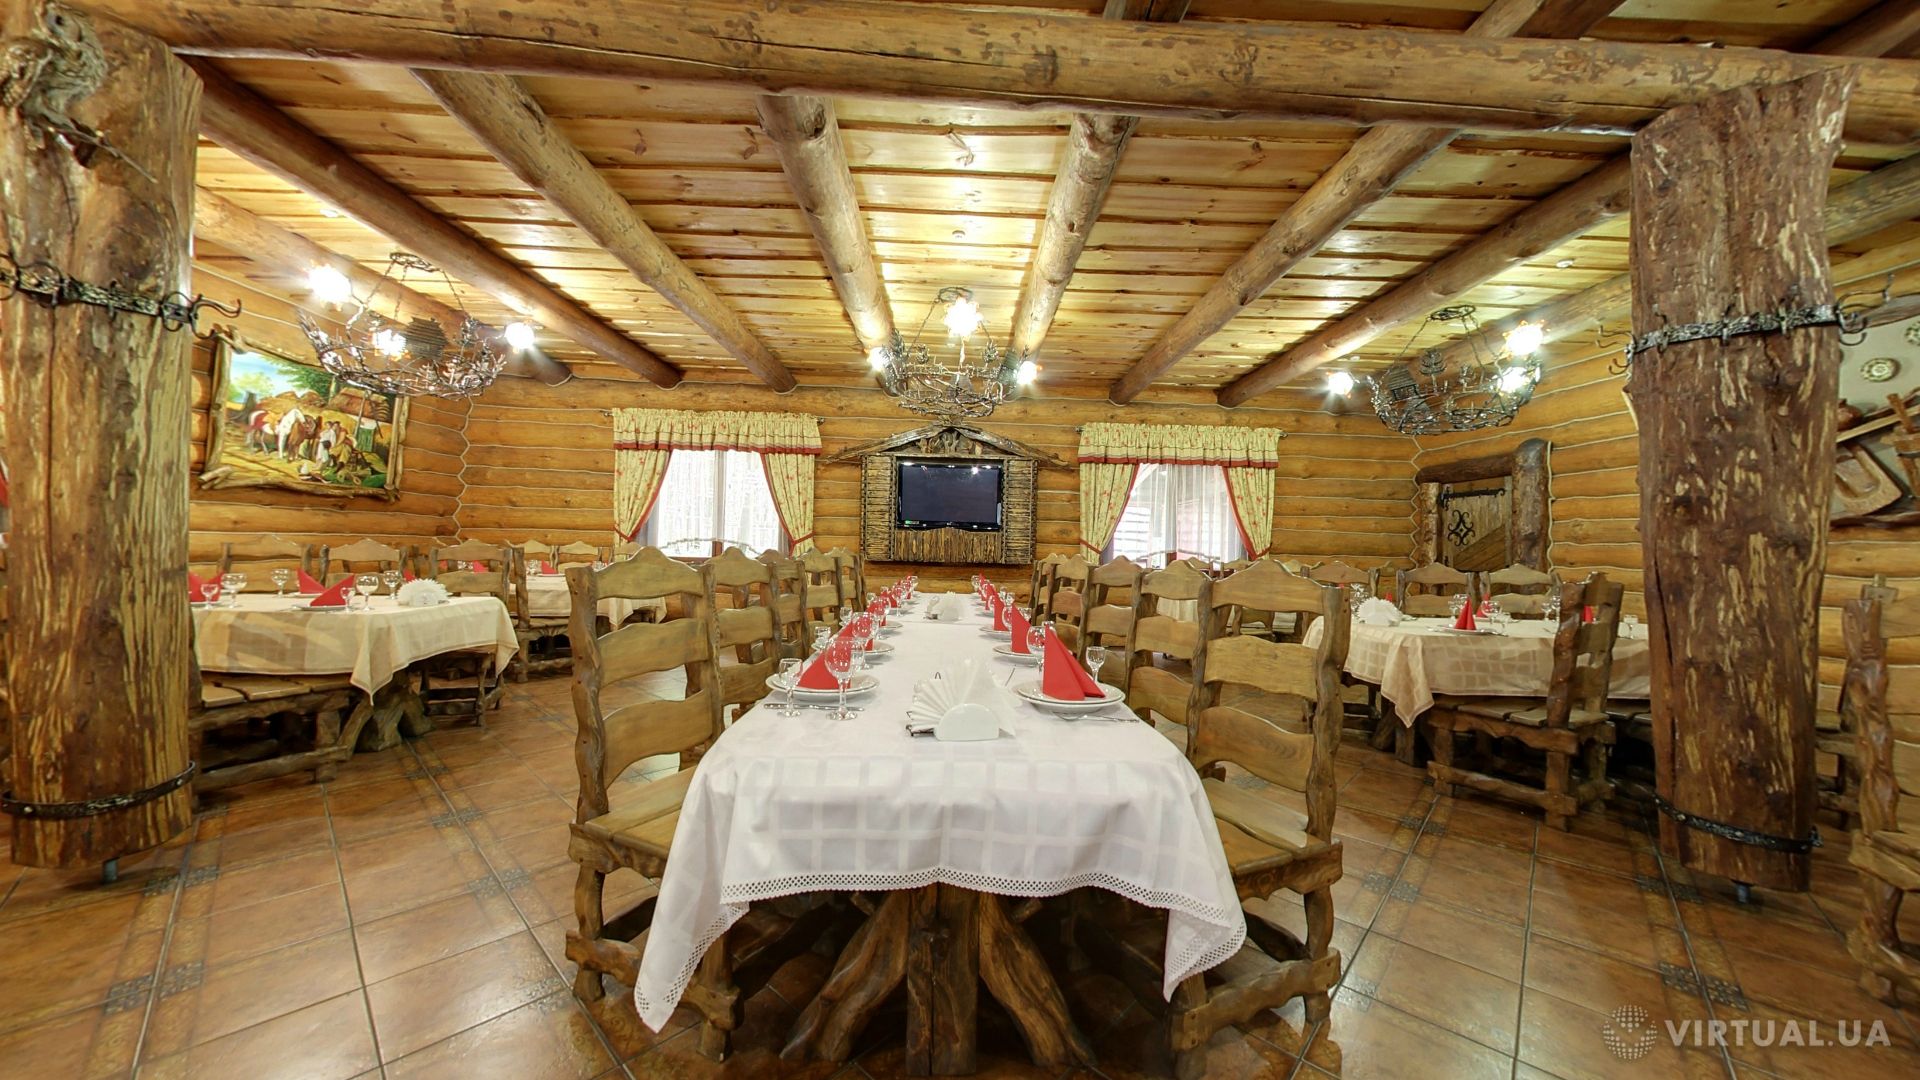 Gostynna Khata Restaurant («Hospitable House»), photo